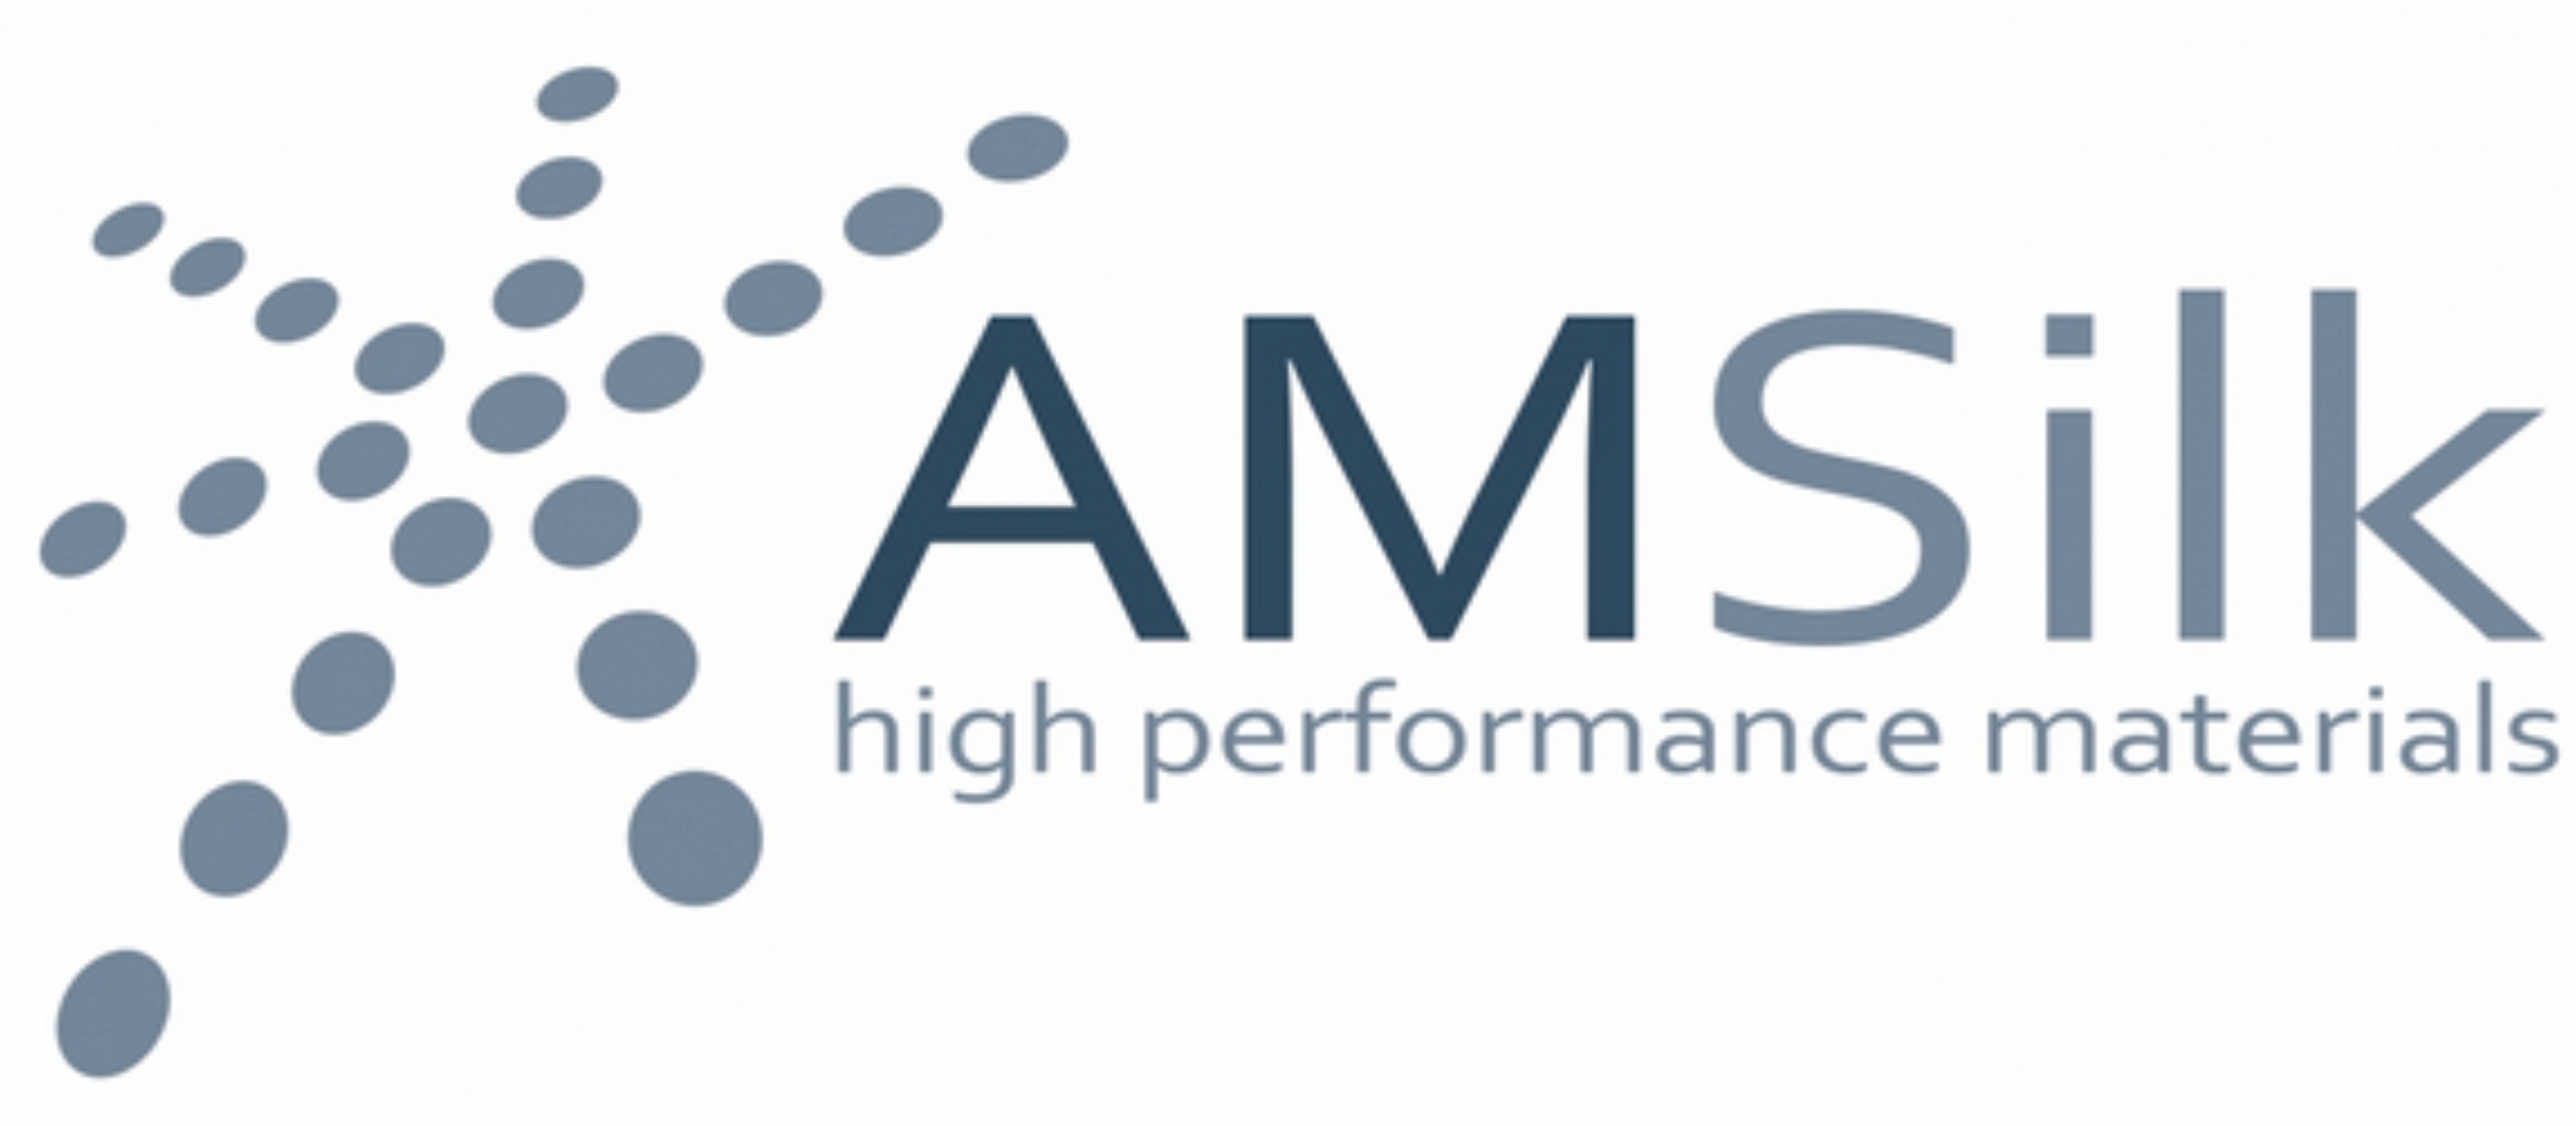 Amsilk high performance materials